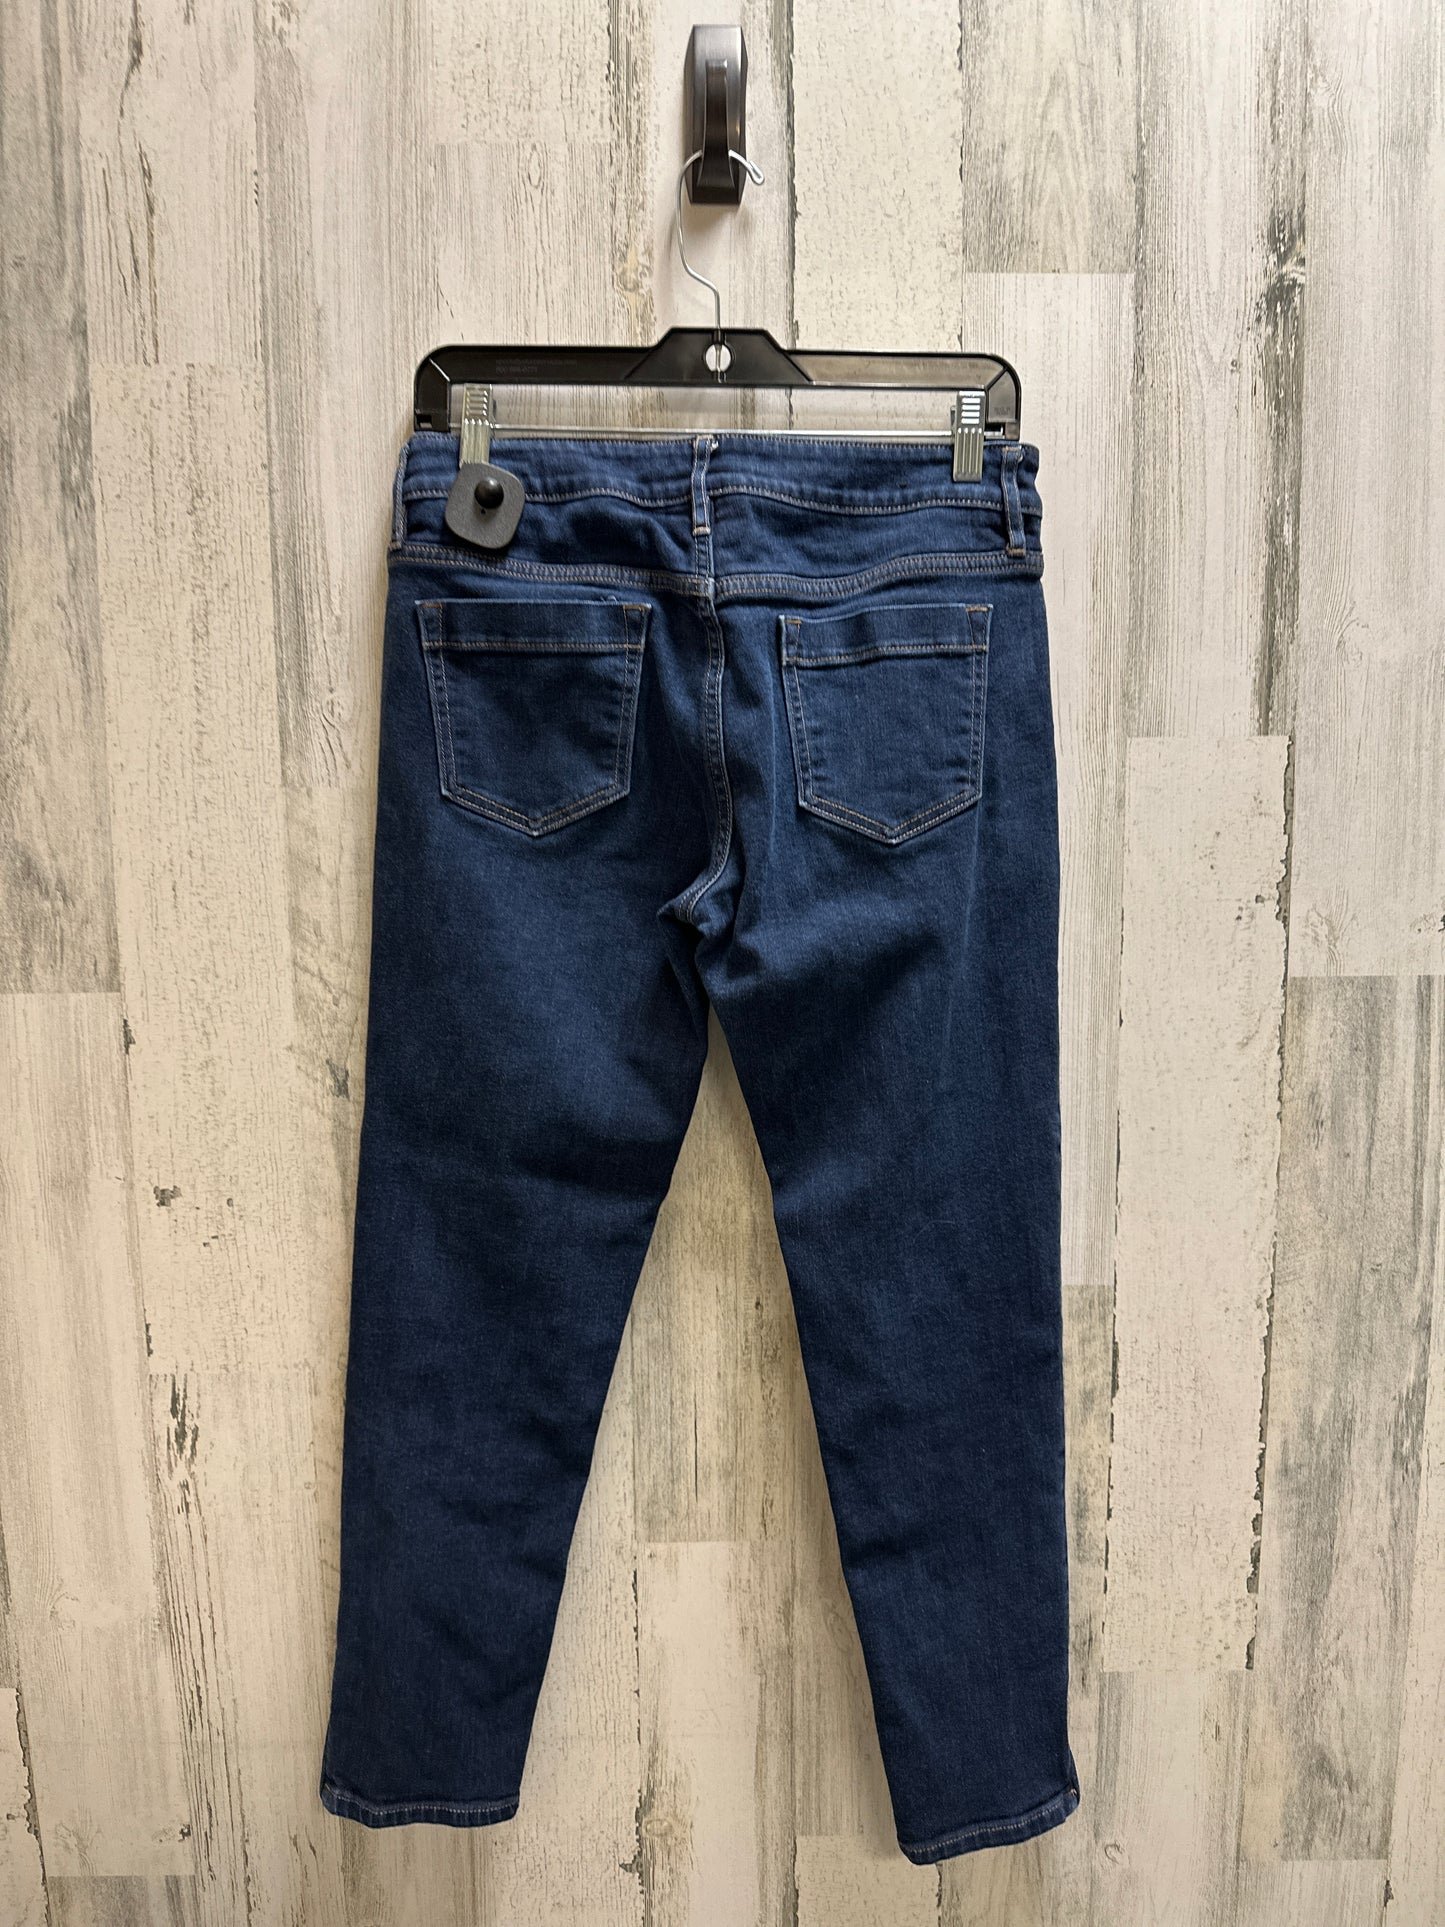 Jeans Skinny By Banana Republic  Size: 8